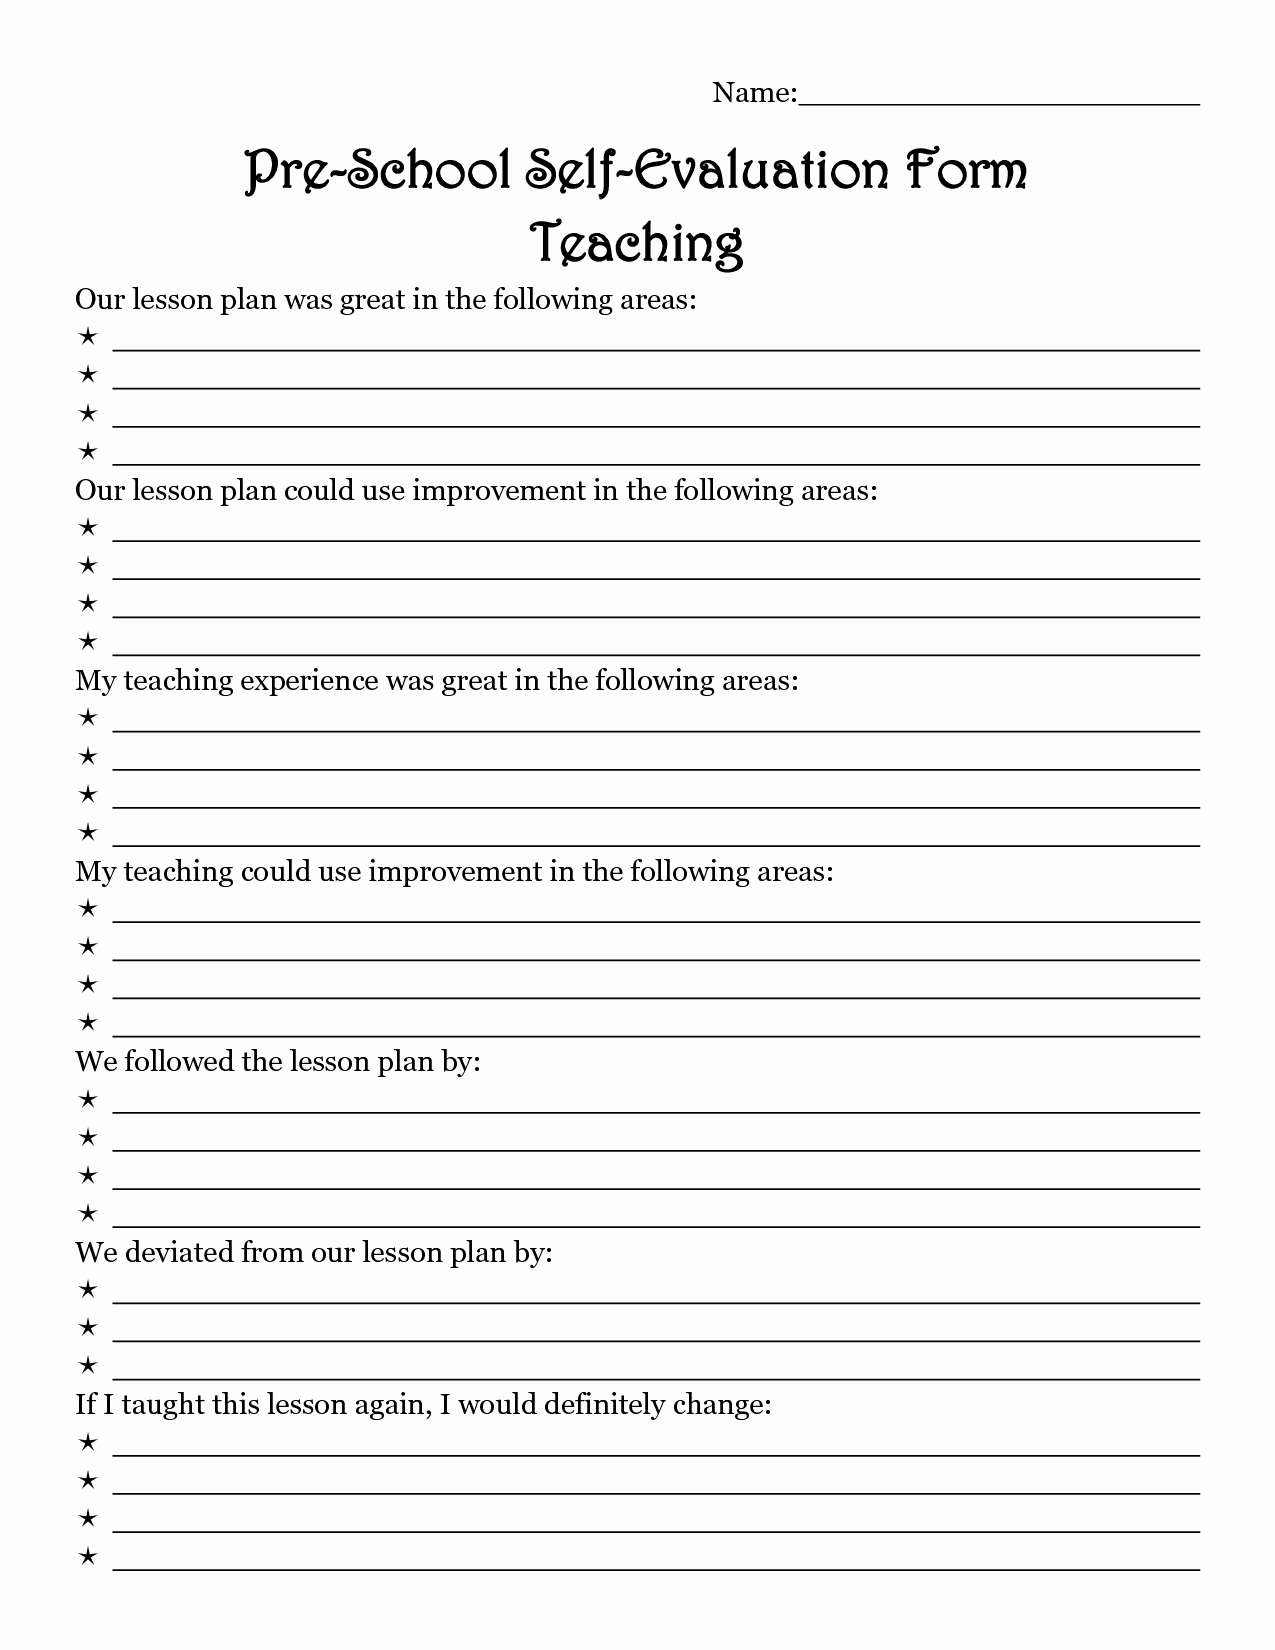 Teacher Evaluation form Template Inspirational Teacher Evaluation form Preschool Early Childhood